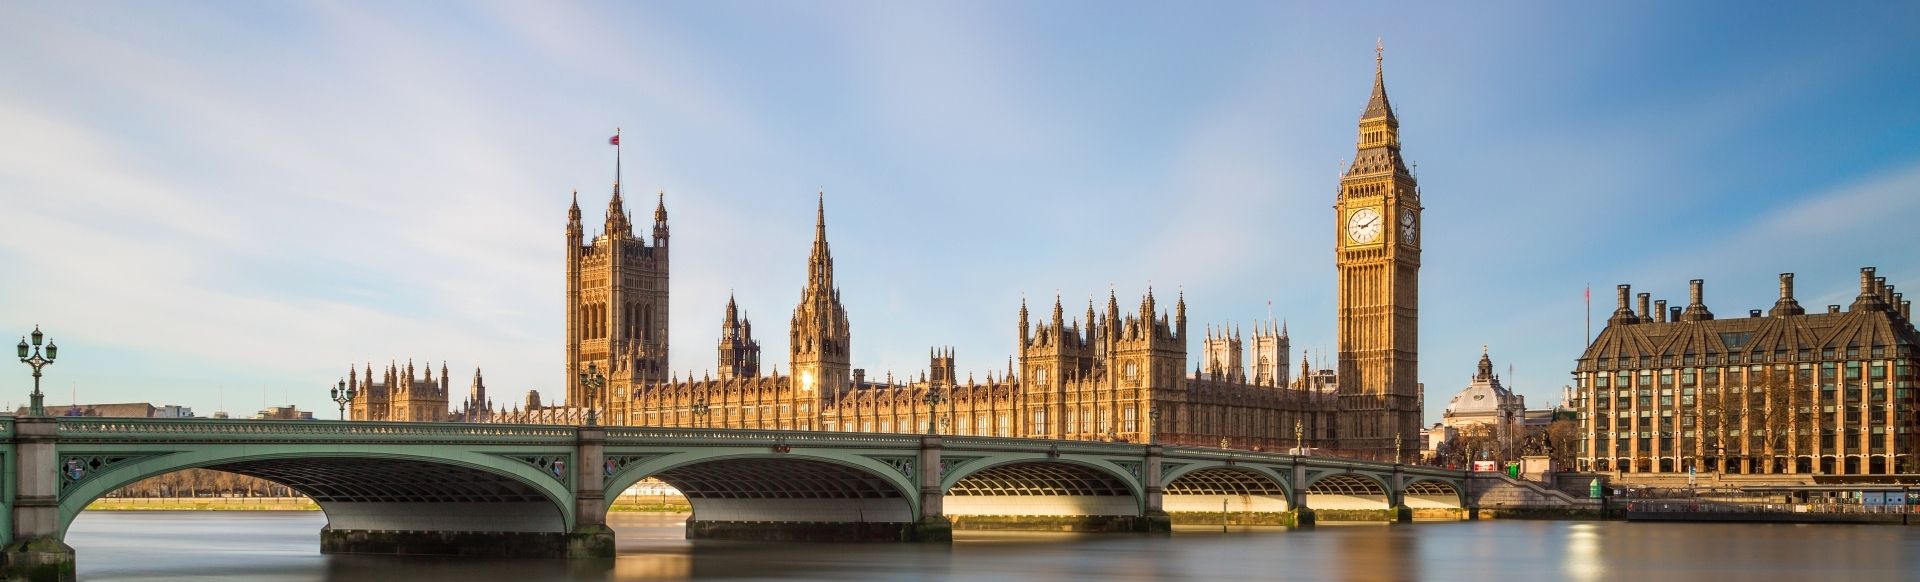 Big Ben, Houses of Parliament and Westminster Bridge in golden sunlight in Westminster.